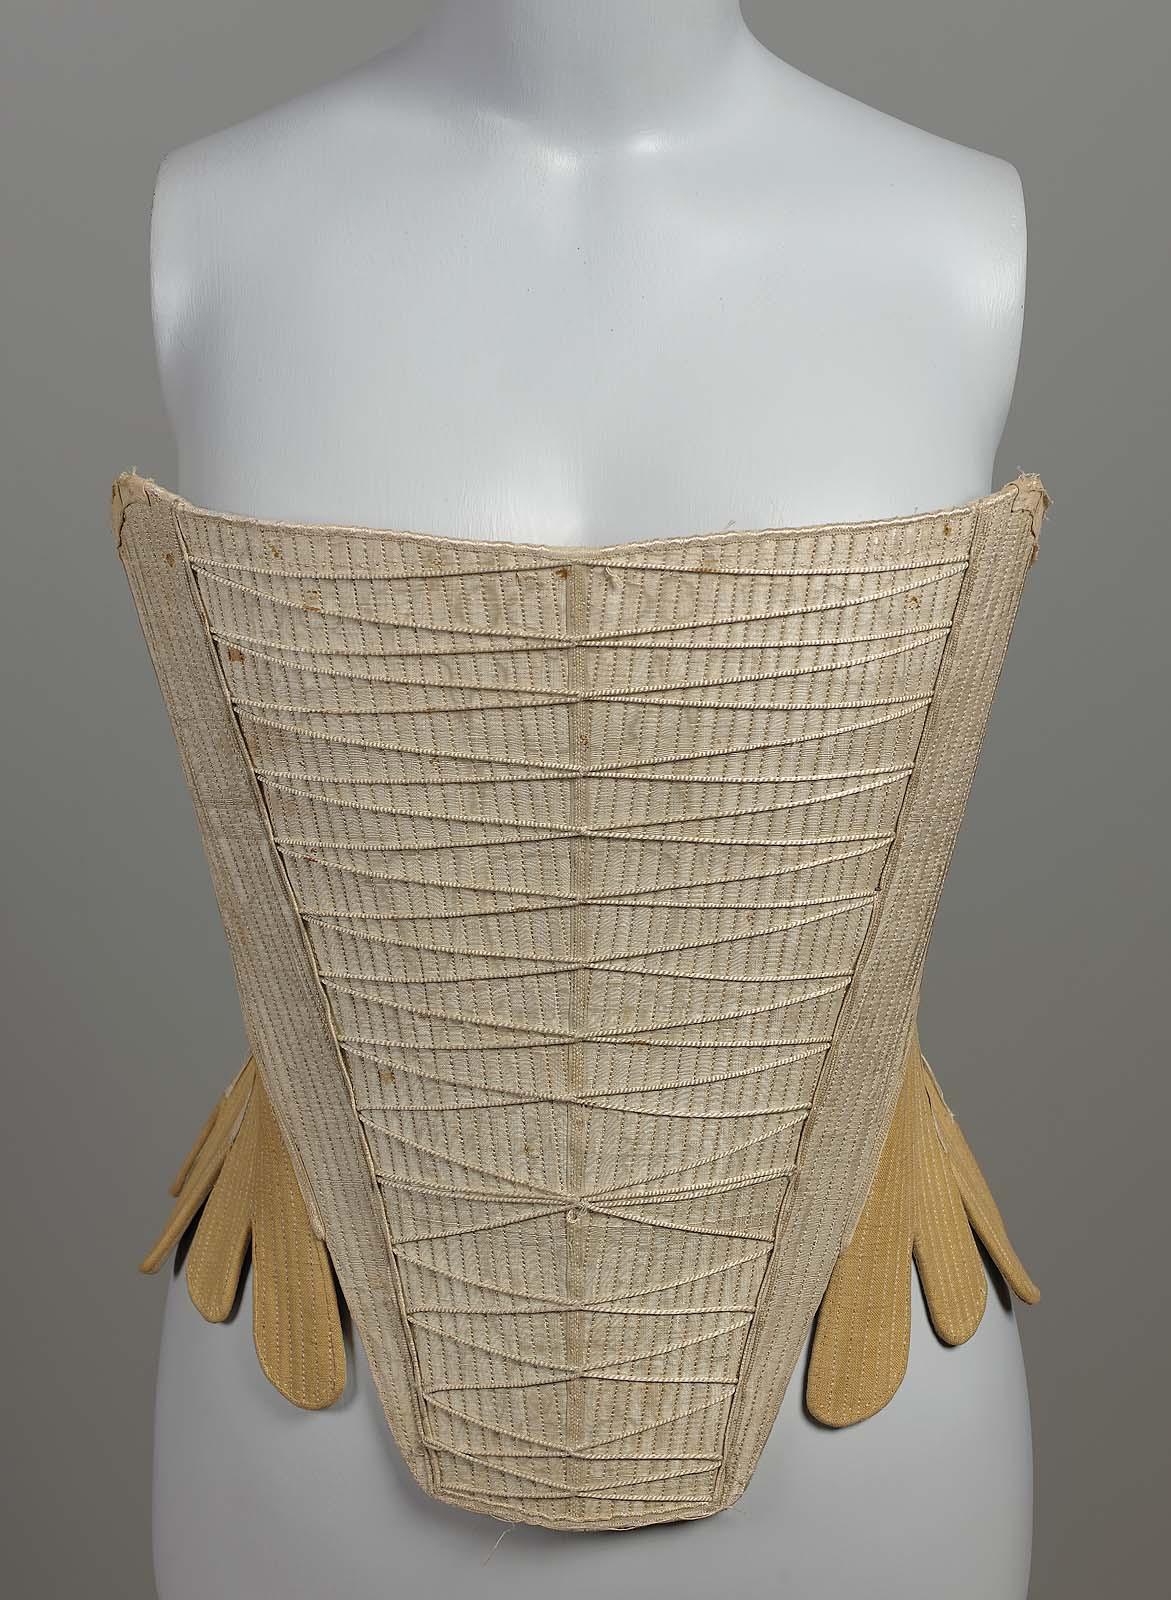 Stays, 1740–60, Massachusettes or New York, USA, White moiré silk rep front, beige linen back; ecru linen lining. White silk ribbon over seams, MFA Boston, 44.347